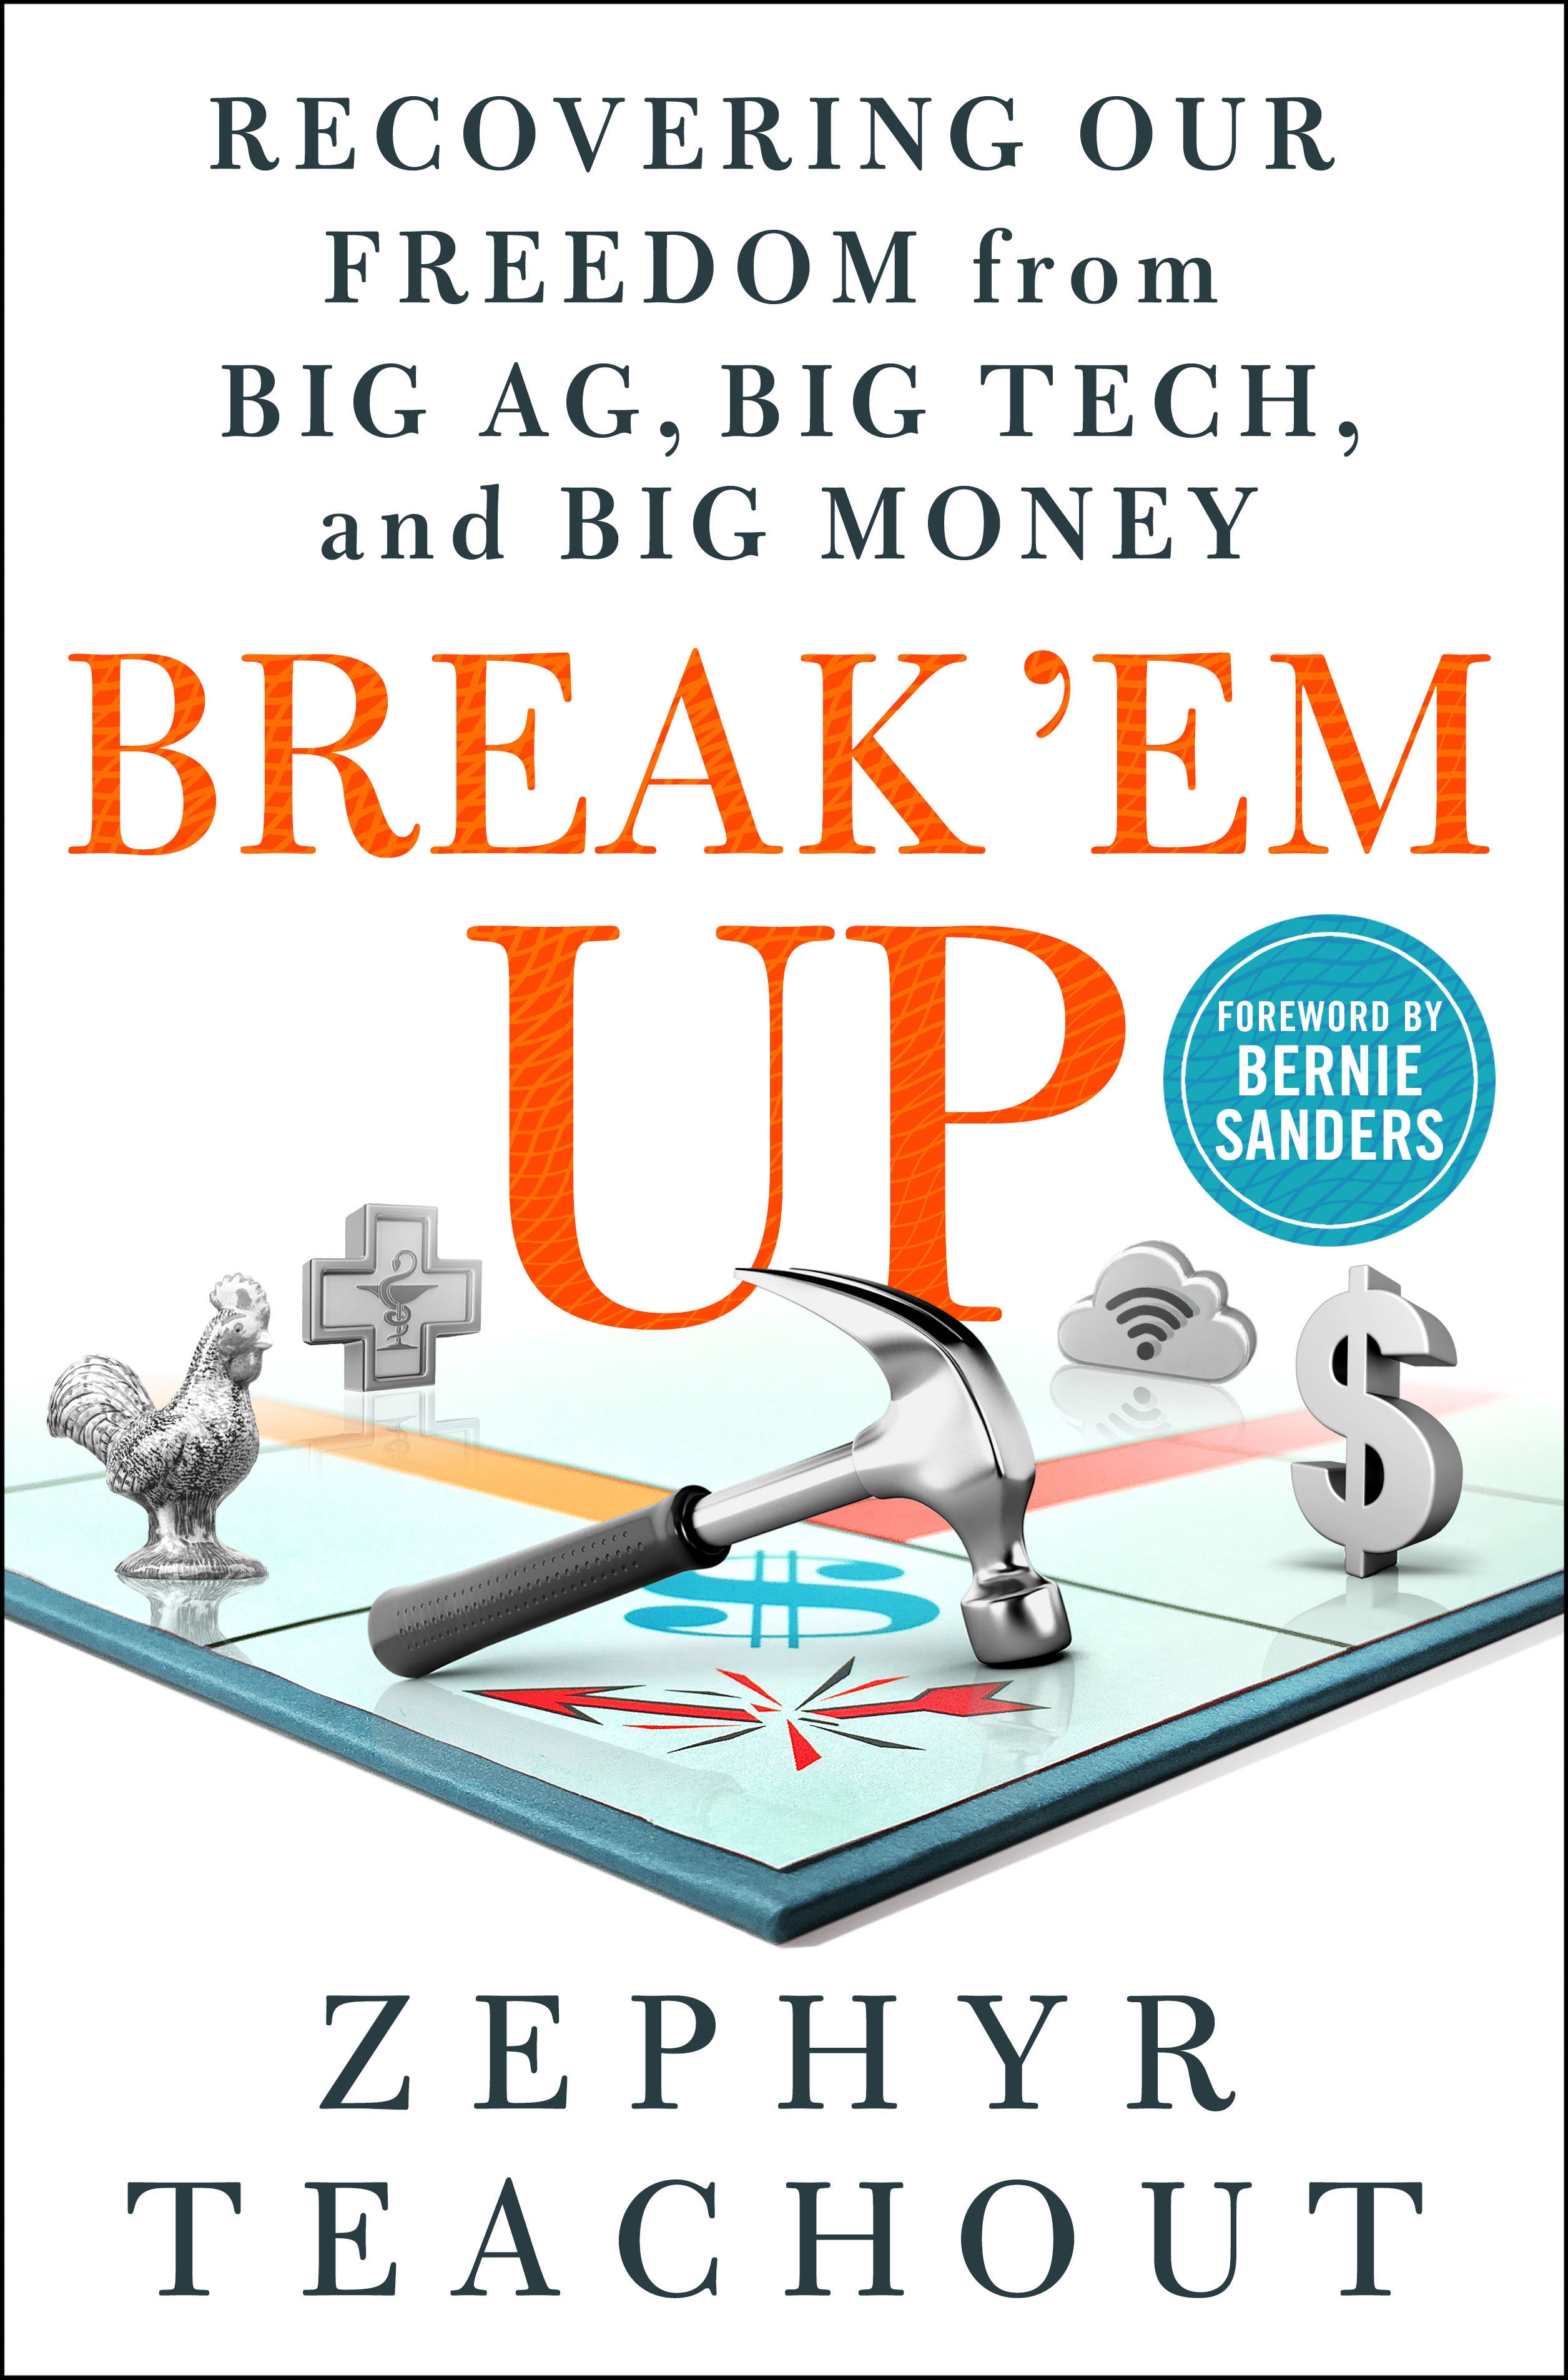 Book “Break 'Em Up” by Zephyr Teachout — July 28, 2020